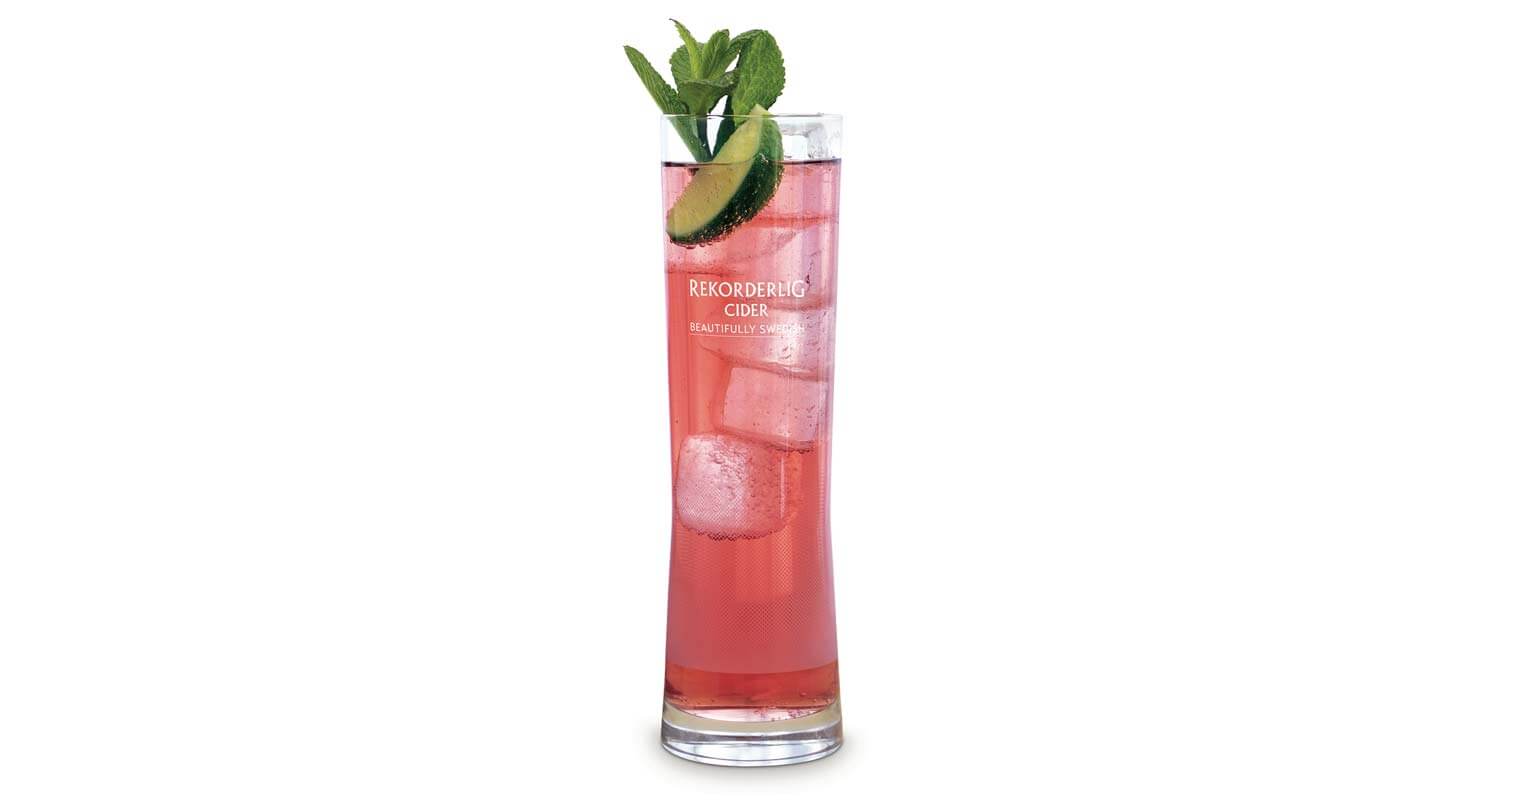 Rekorderlig Strawberry-Lime Cider, featured image